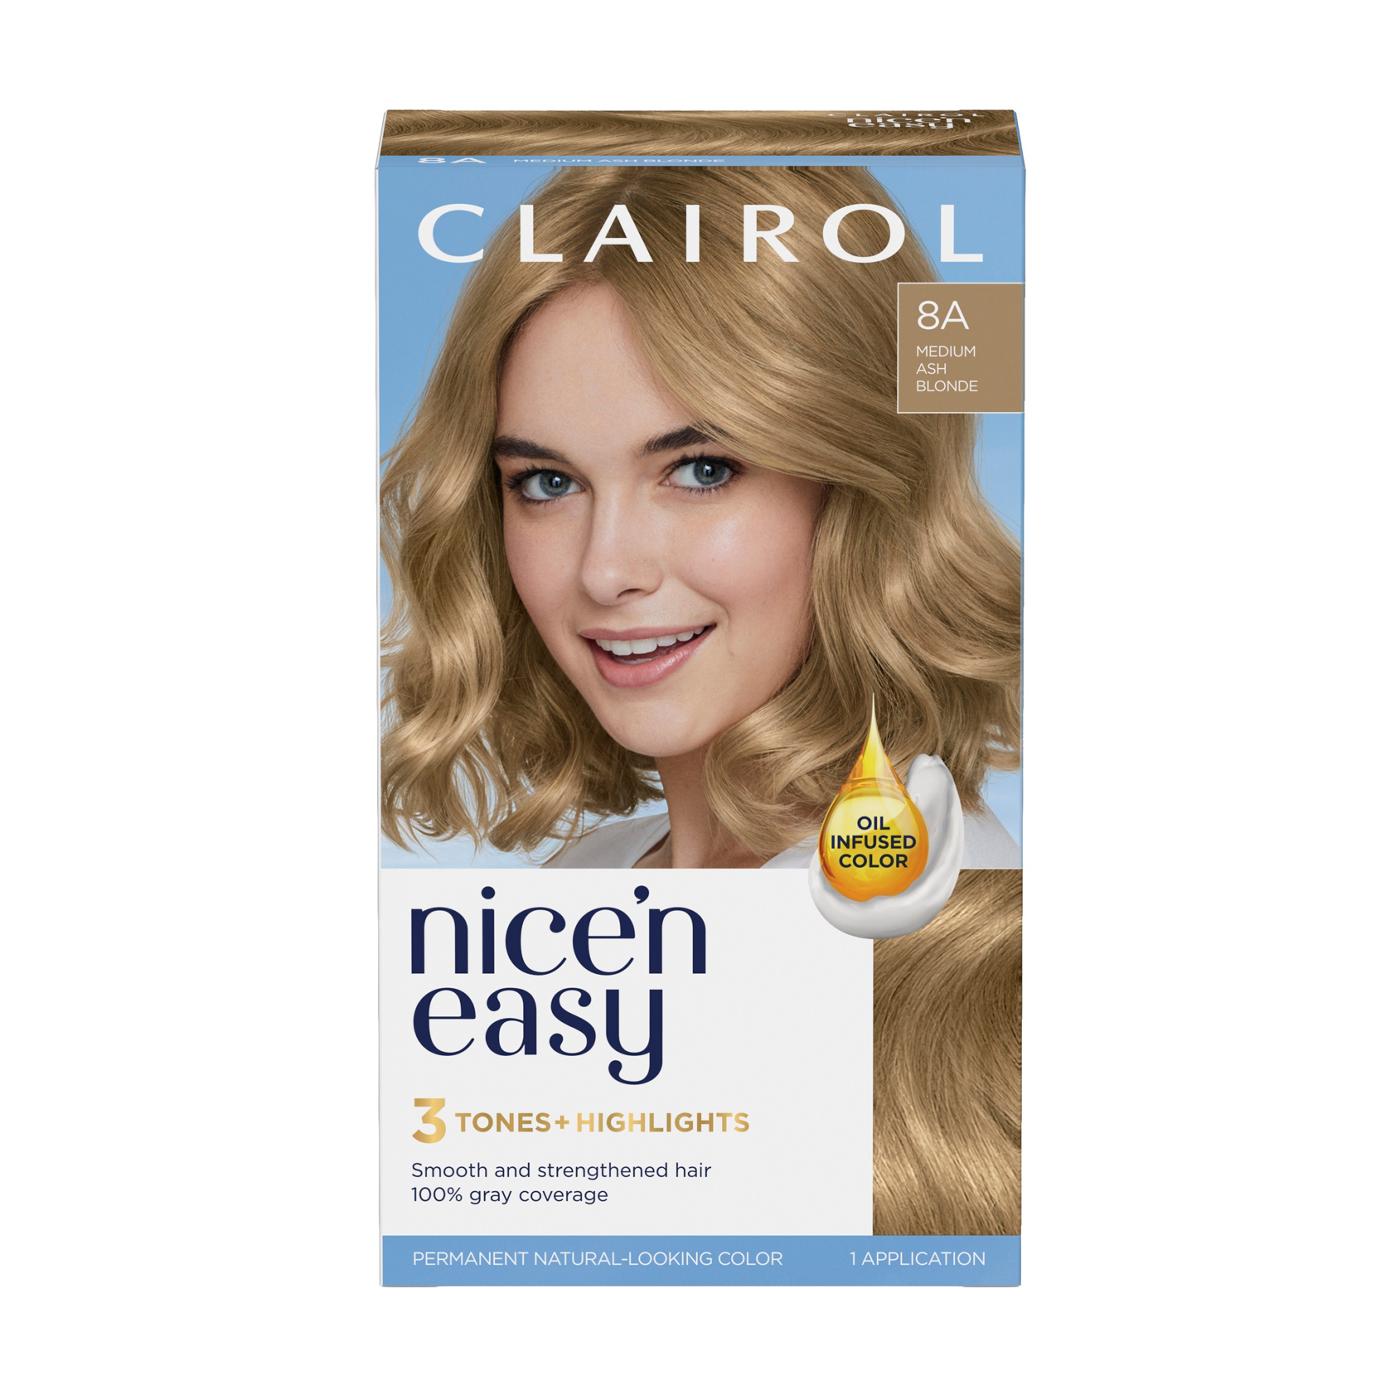 Clairol Nice 'N Easy Permanent Hair Color - 8A Medium Ash Blonde; image 1 of 4